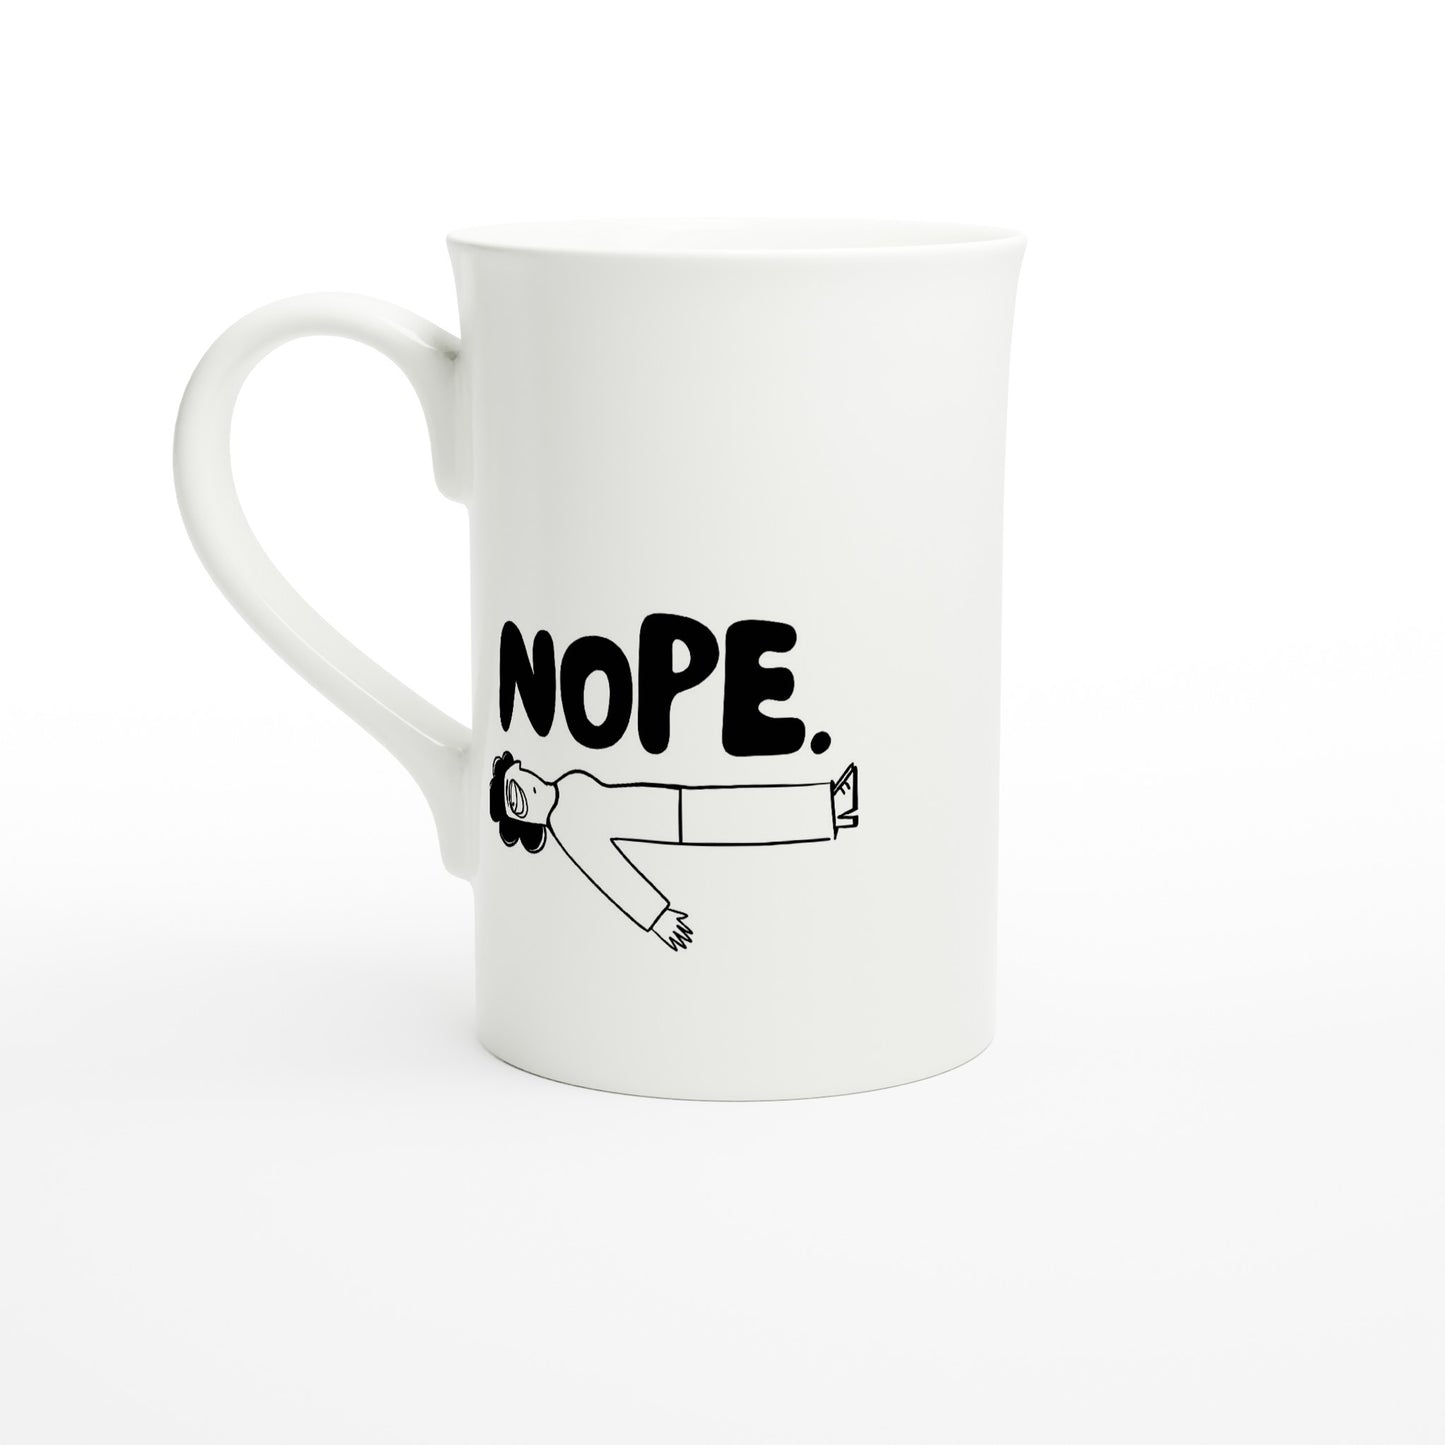 NOPE - White 10oz Porcelain Slim Mug